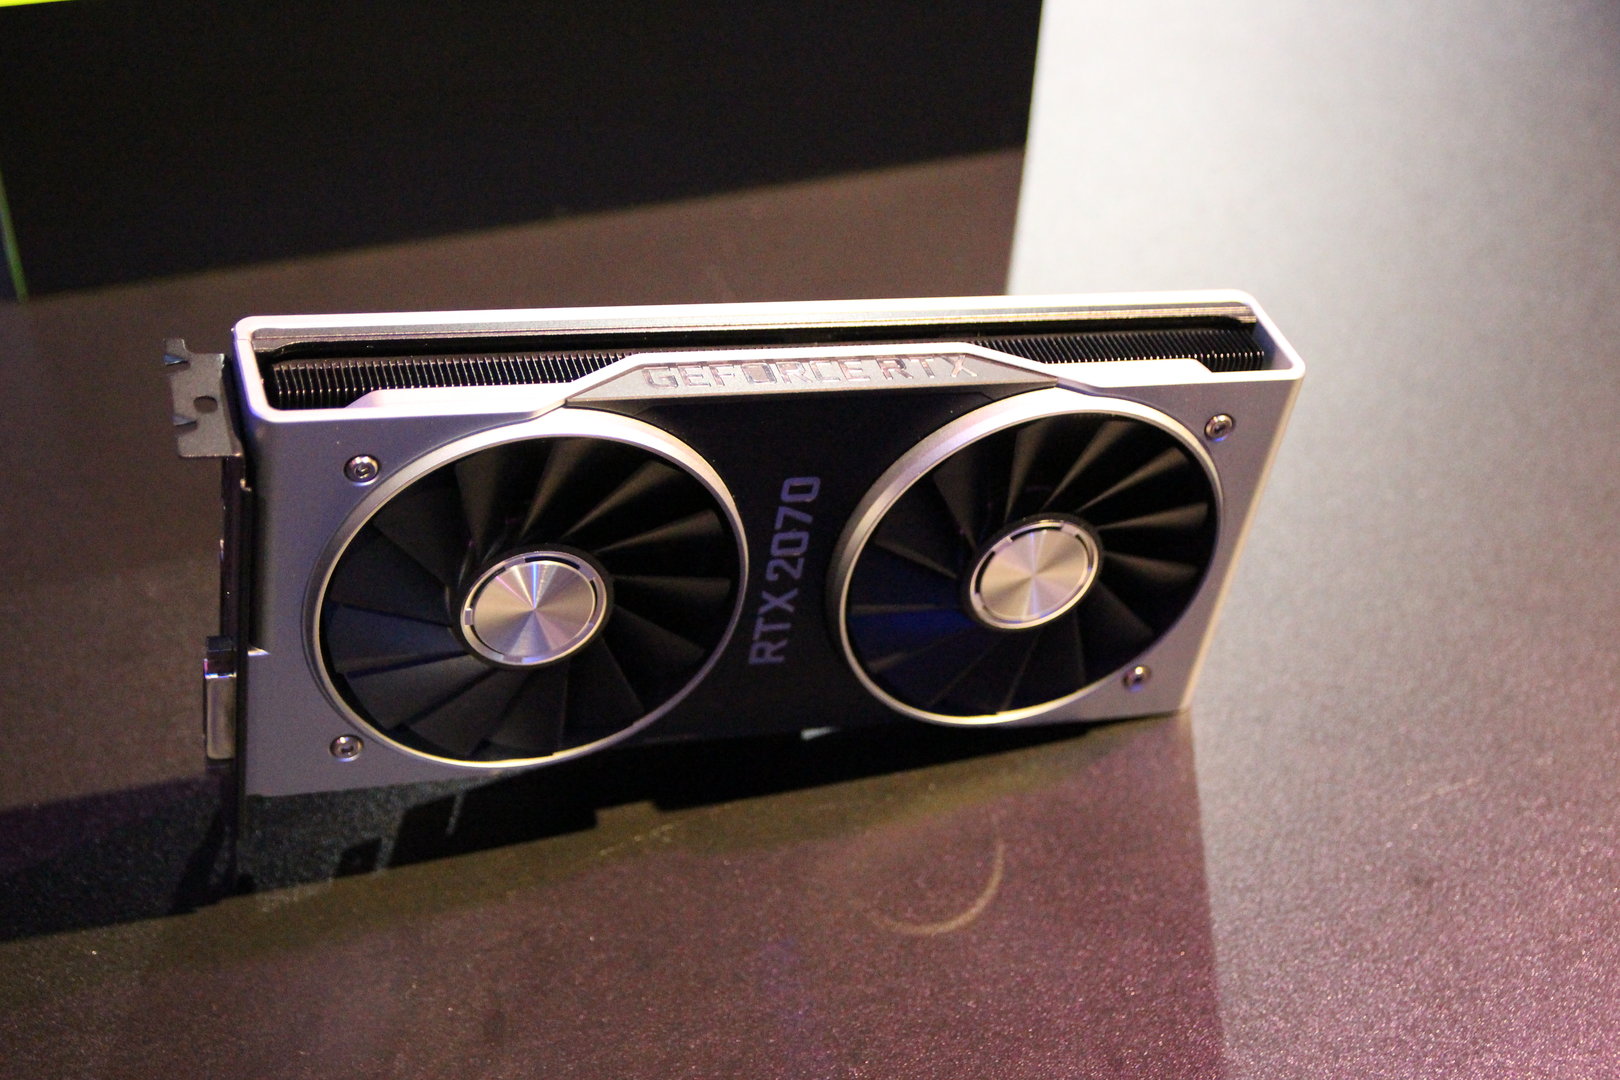 Nvidia GeForce RTX 2070 FE